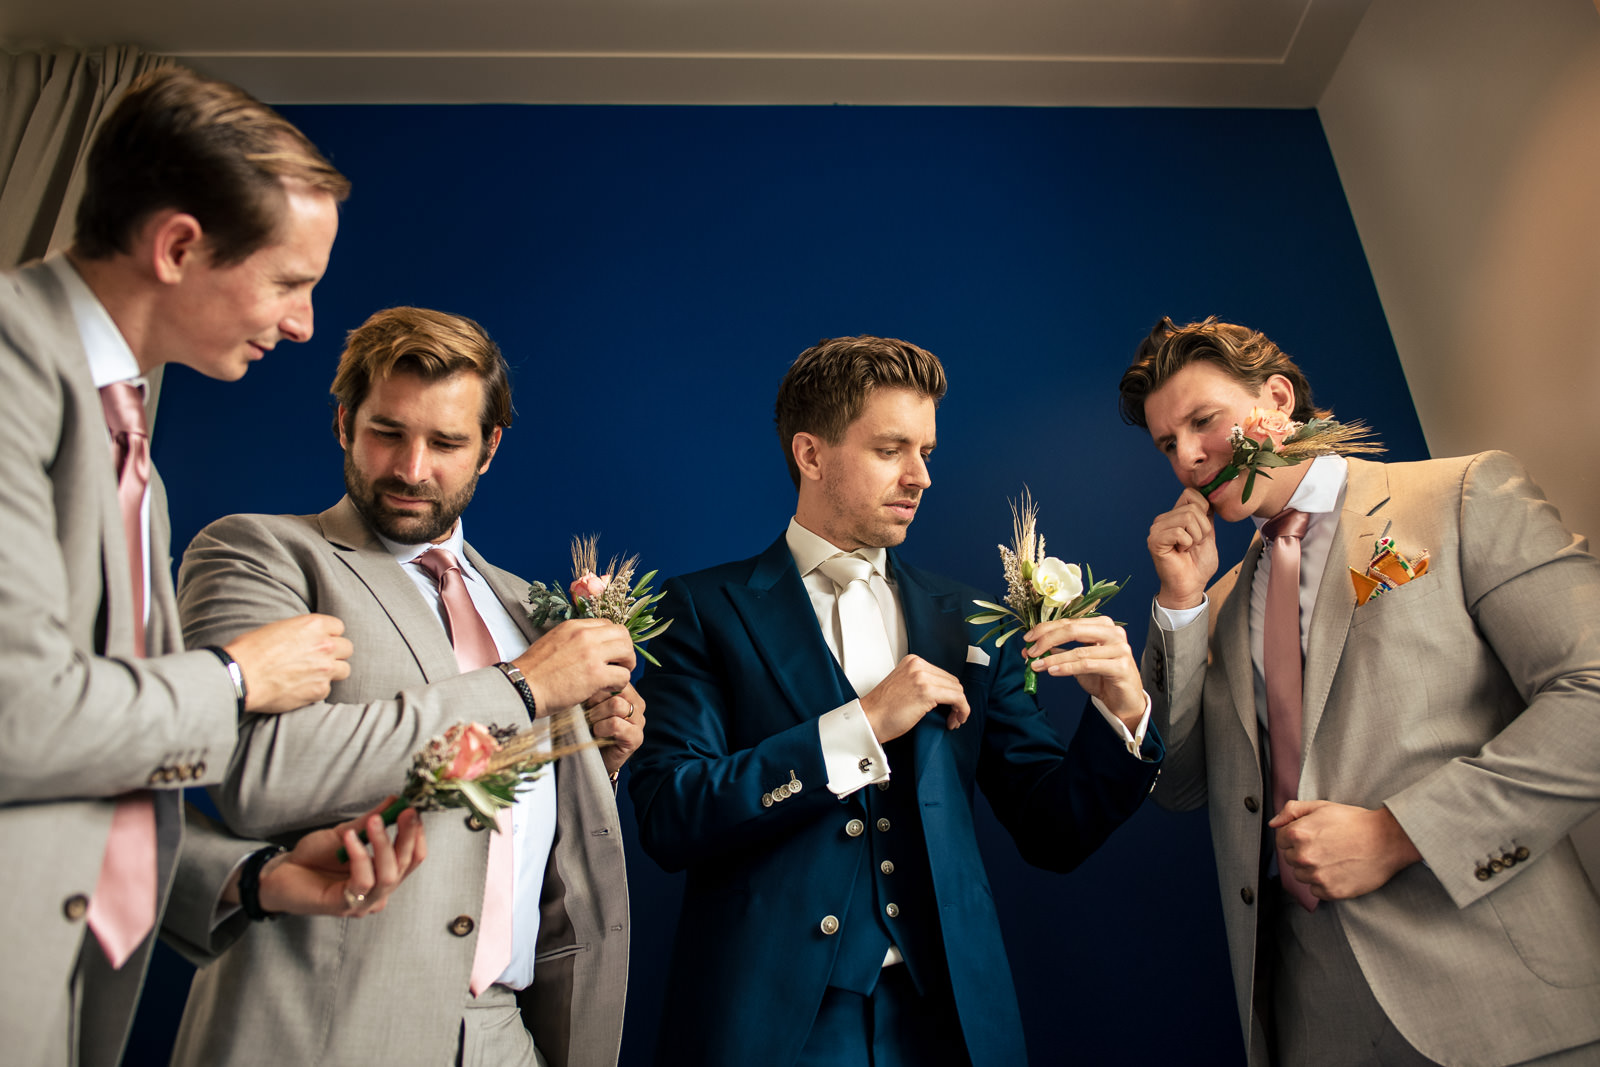 Trouwfotograaf Amsterdam corsages bruidegom en best men